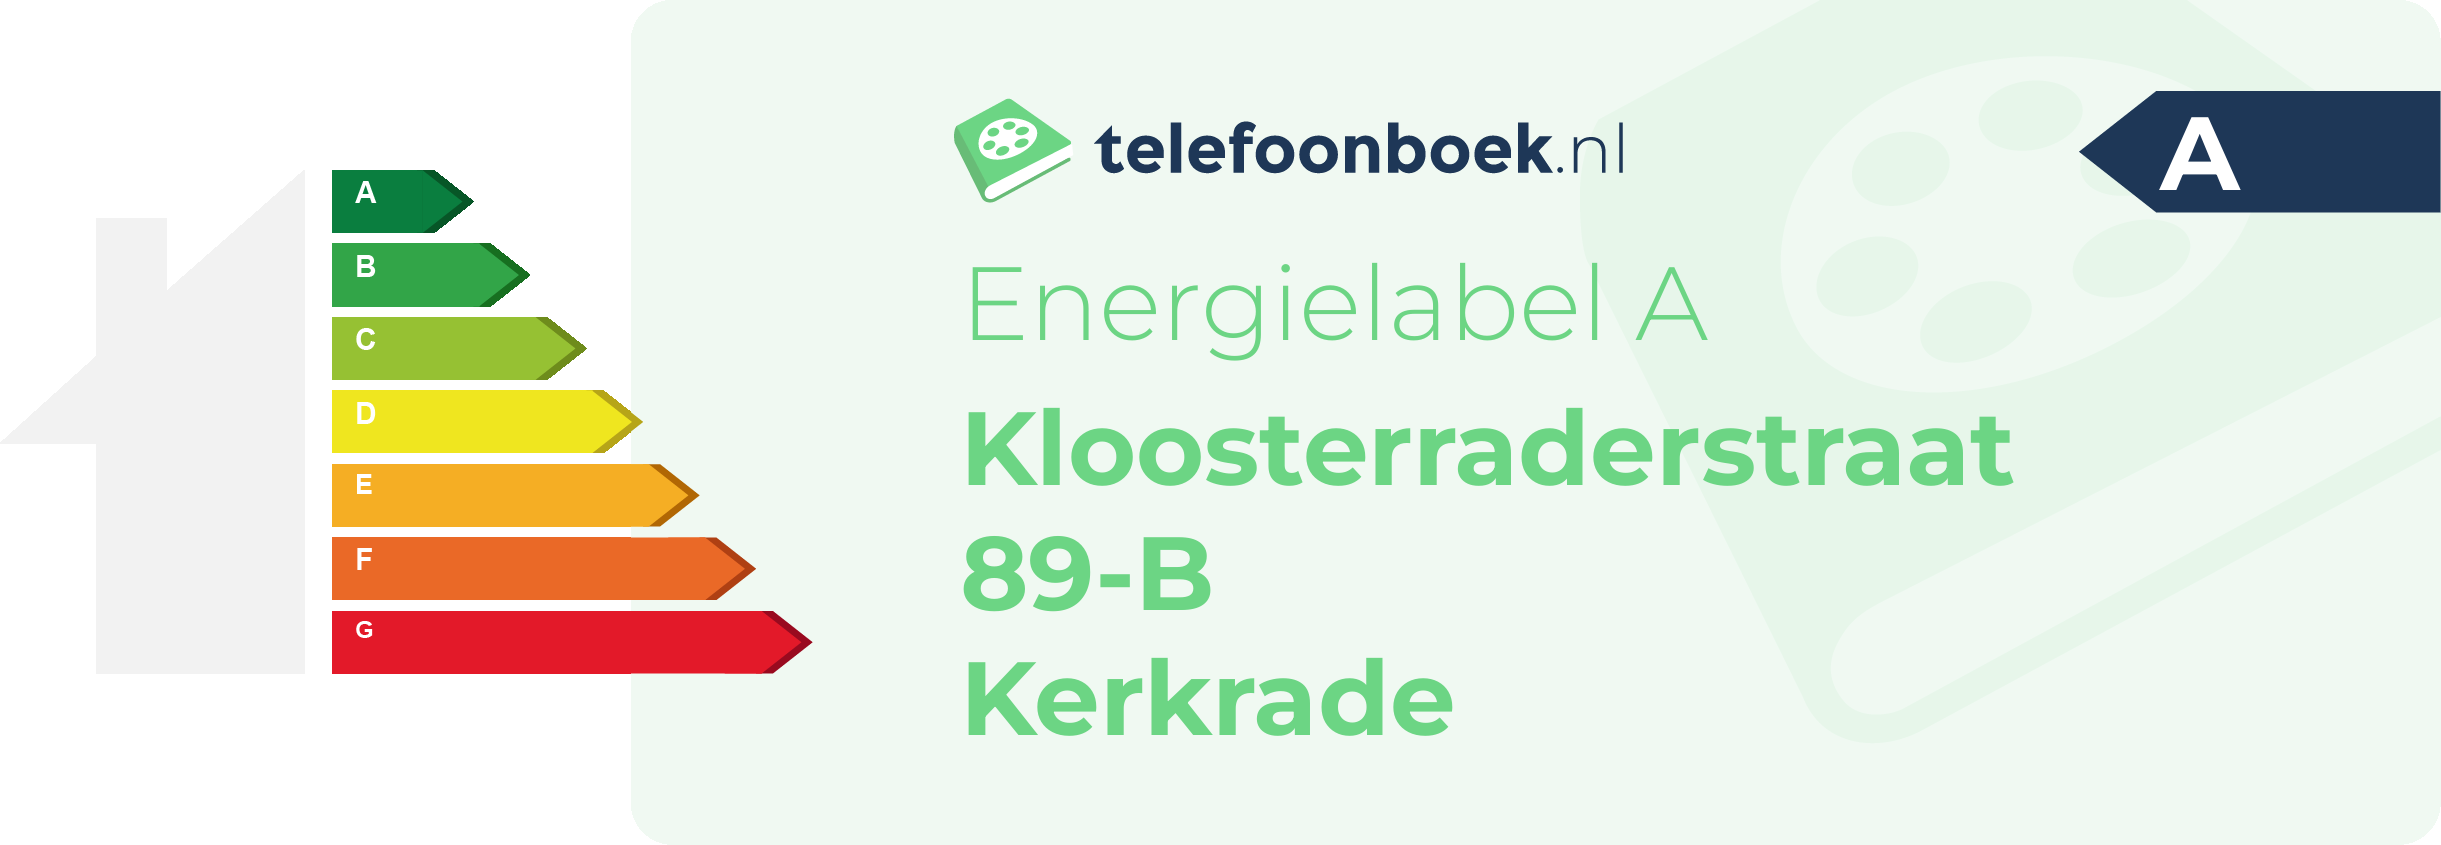 Energielabel Kloosterraderstraat 89-B Kerkrade